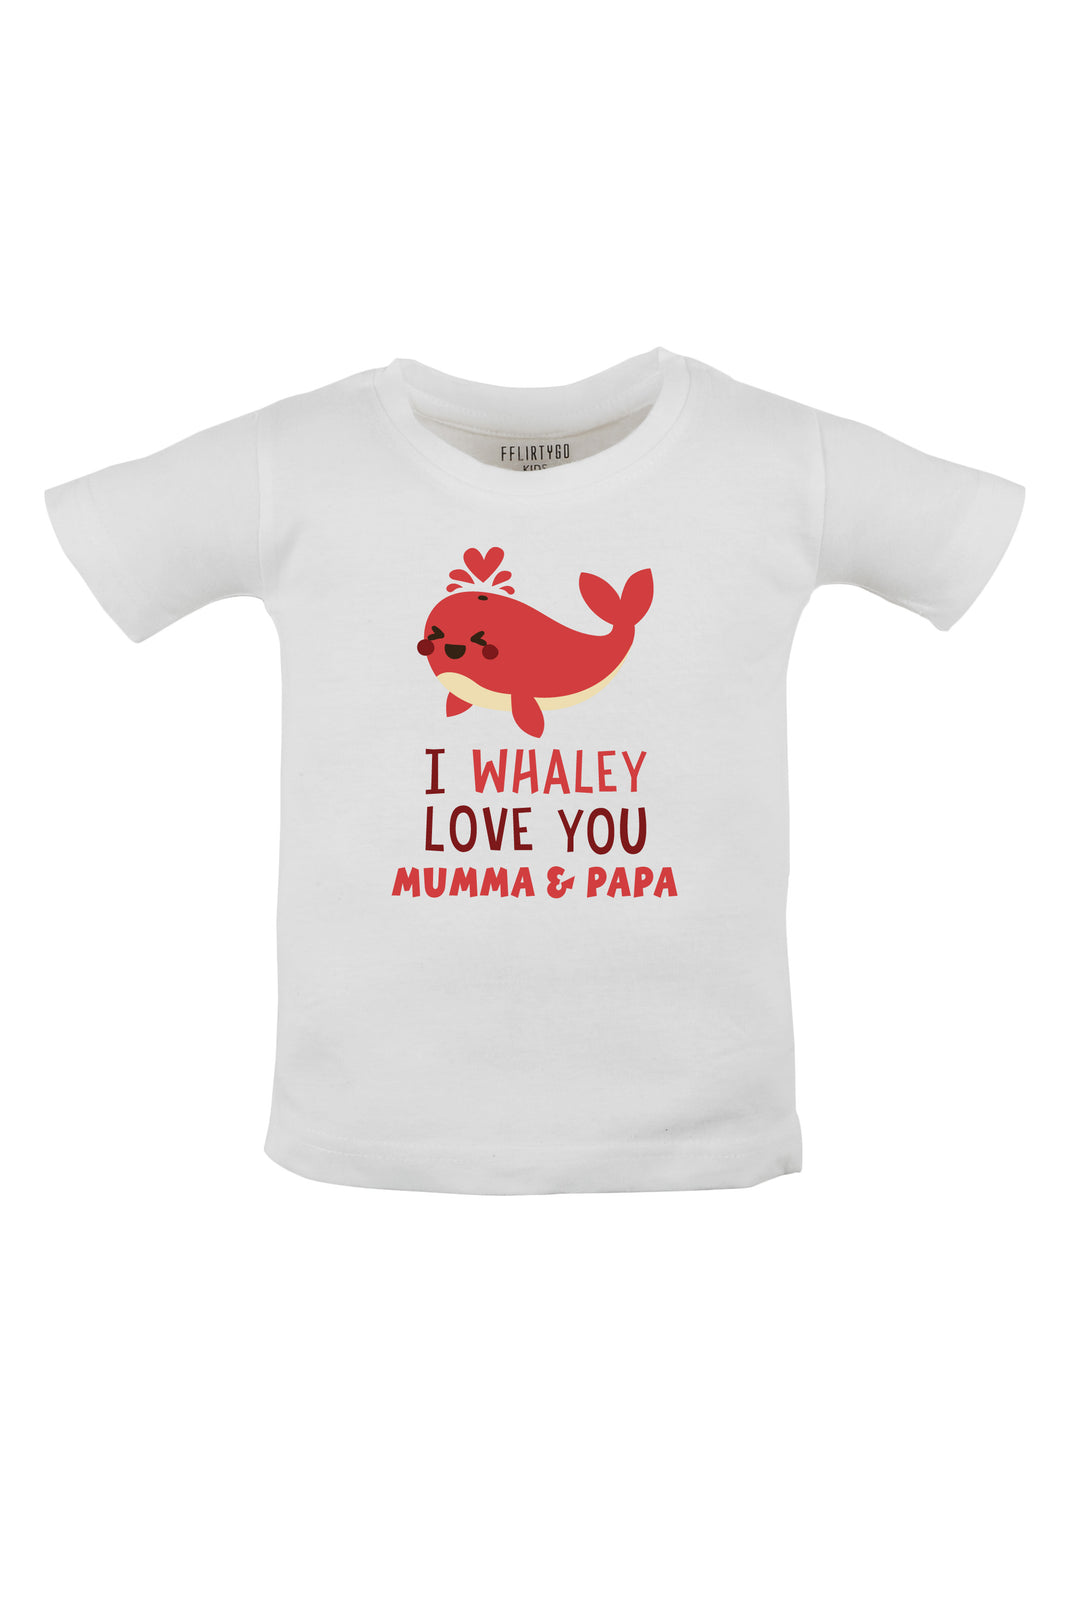 I Whaley Love You Mumma & Papa Kids T Shirt